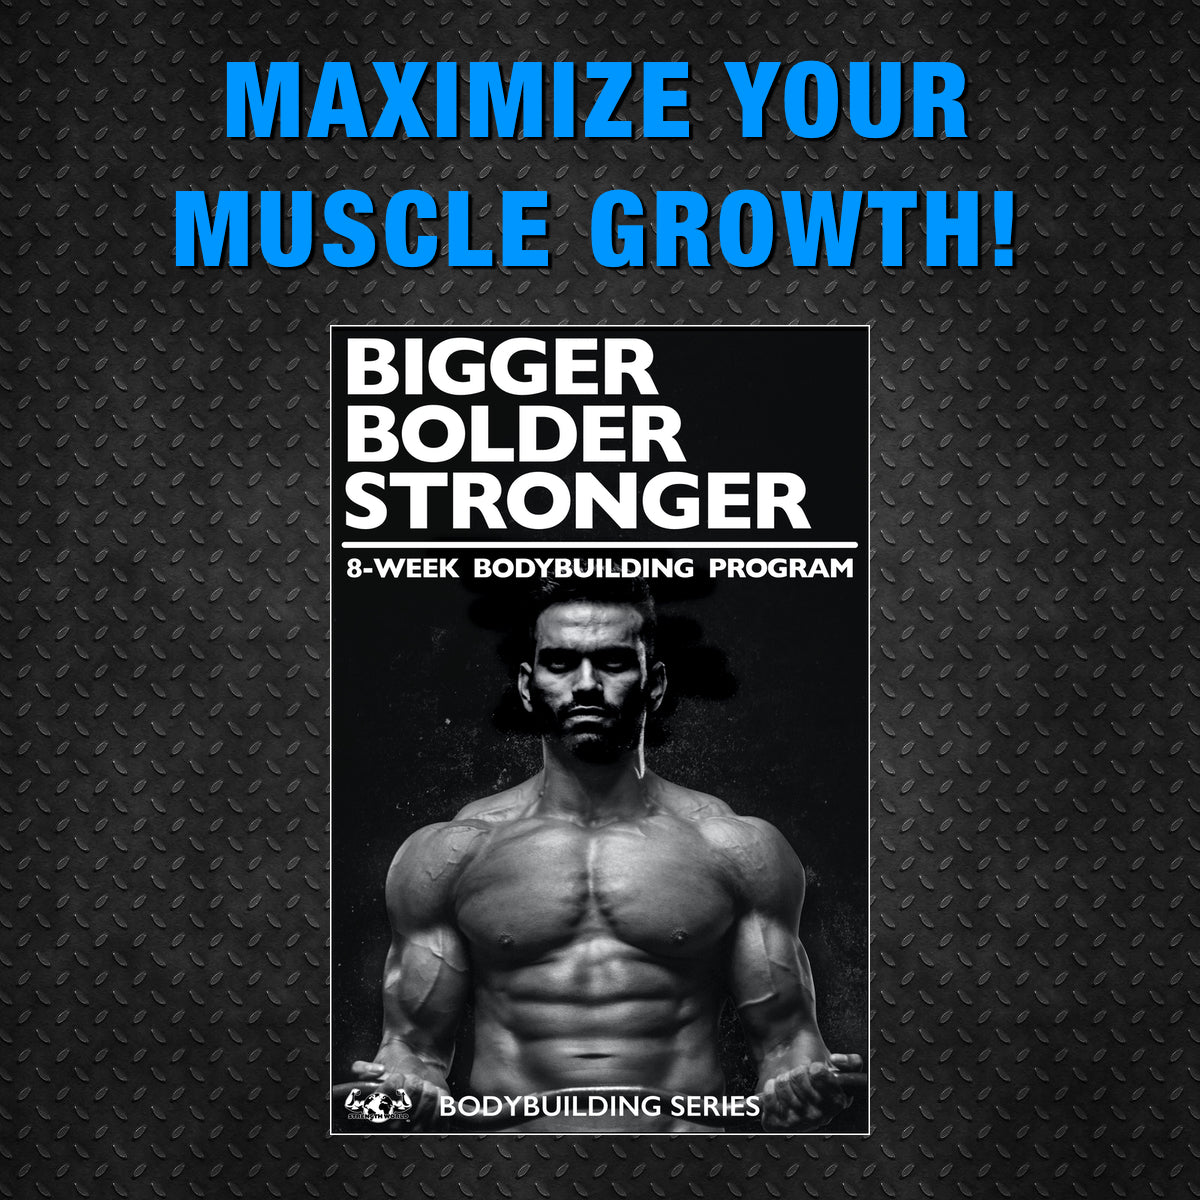 Bigger Bolder Stronger Bodybuilding Program Ad 2